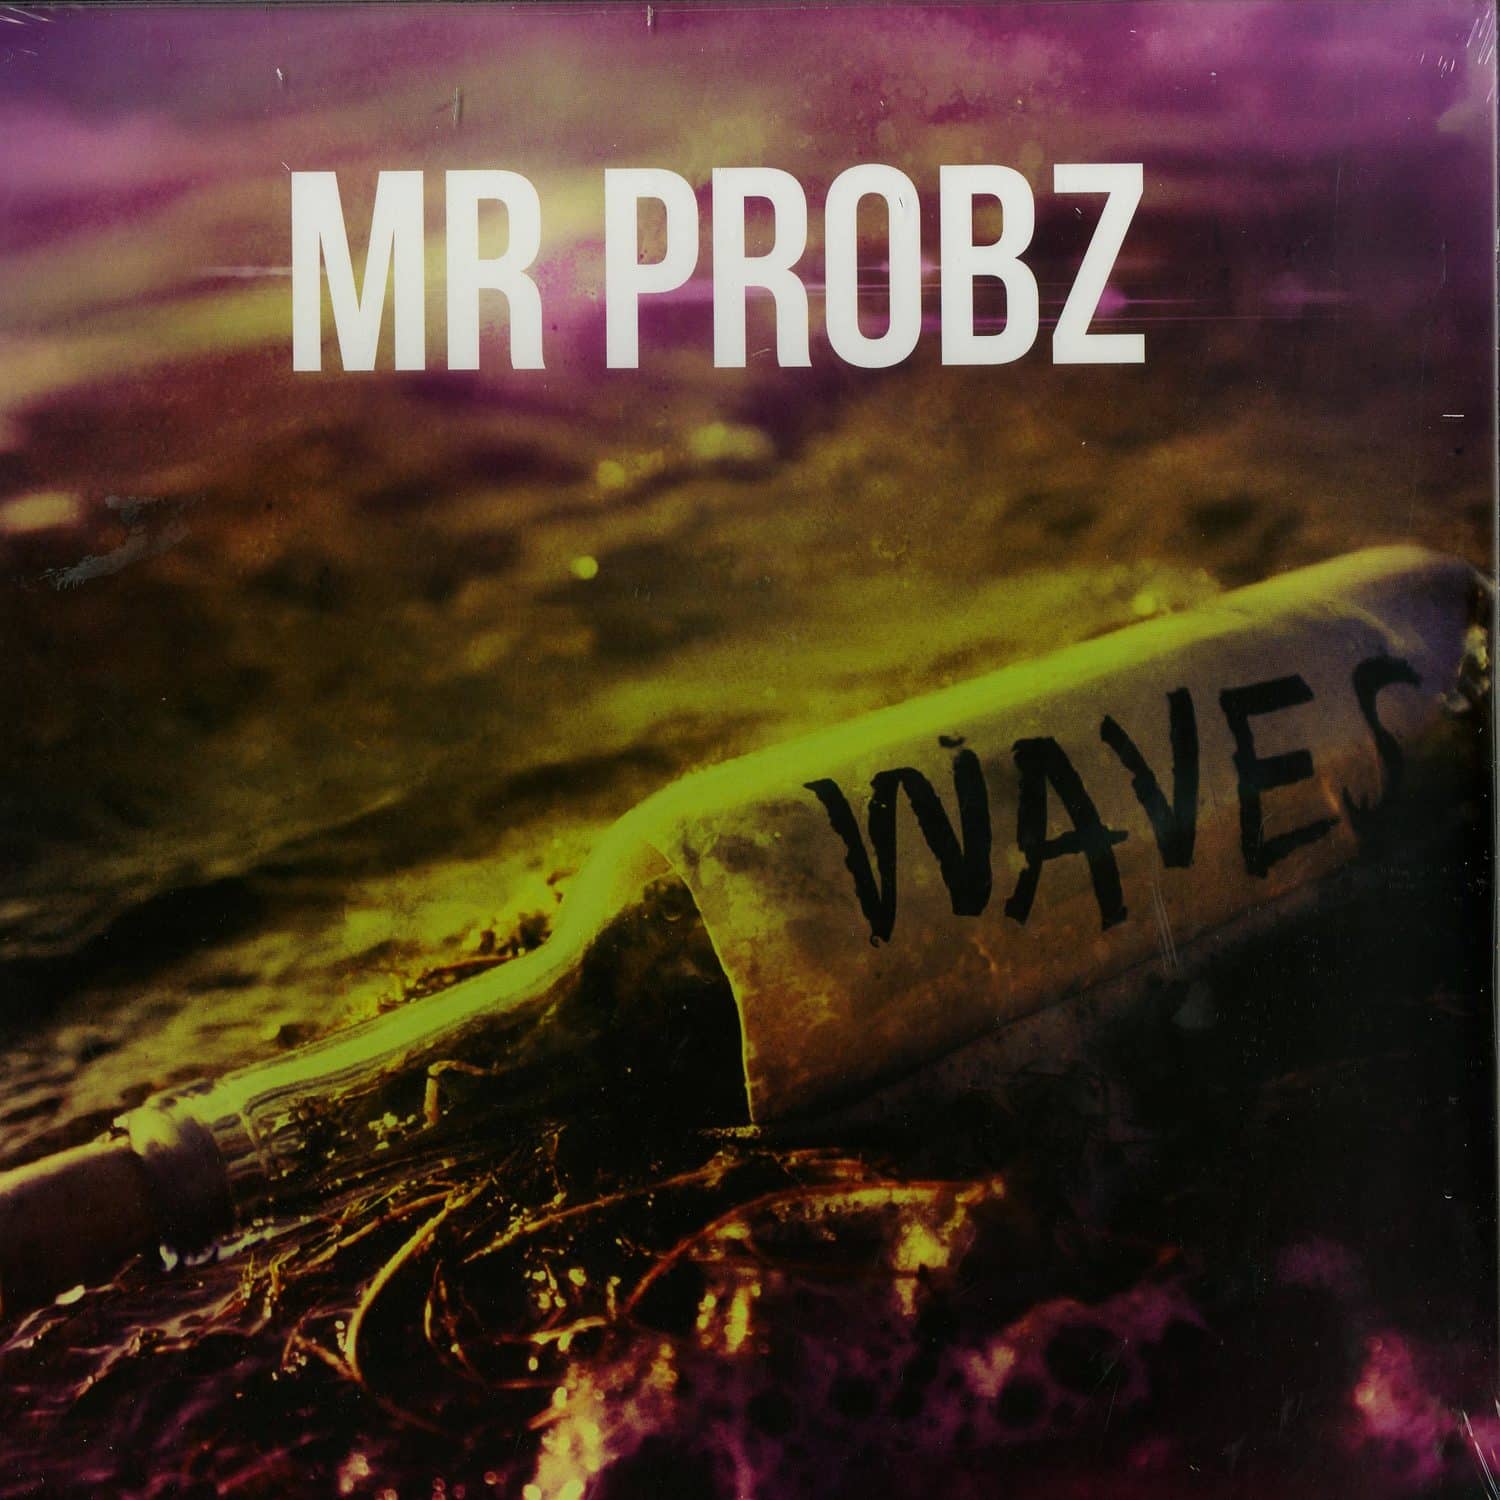 Mr probz